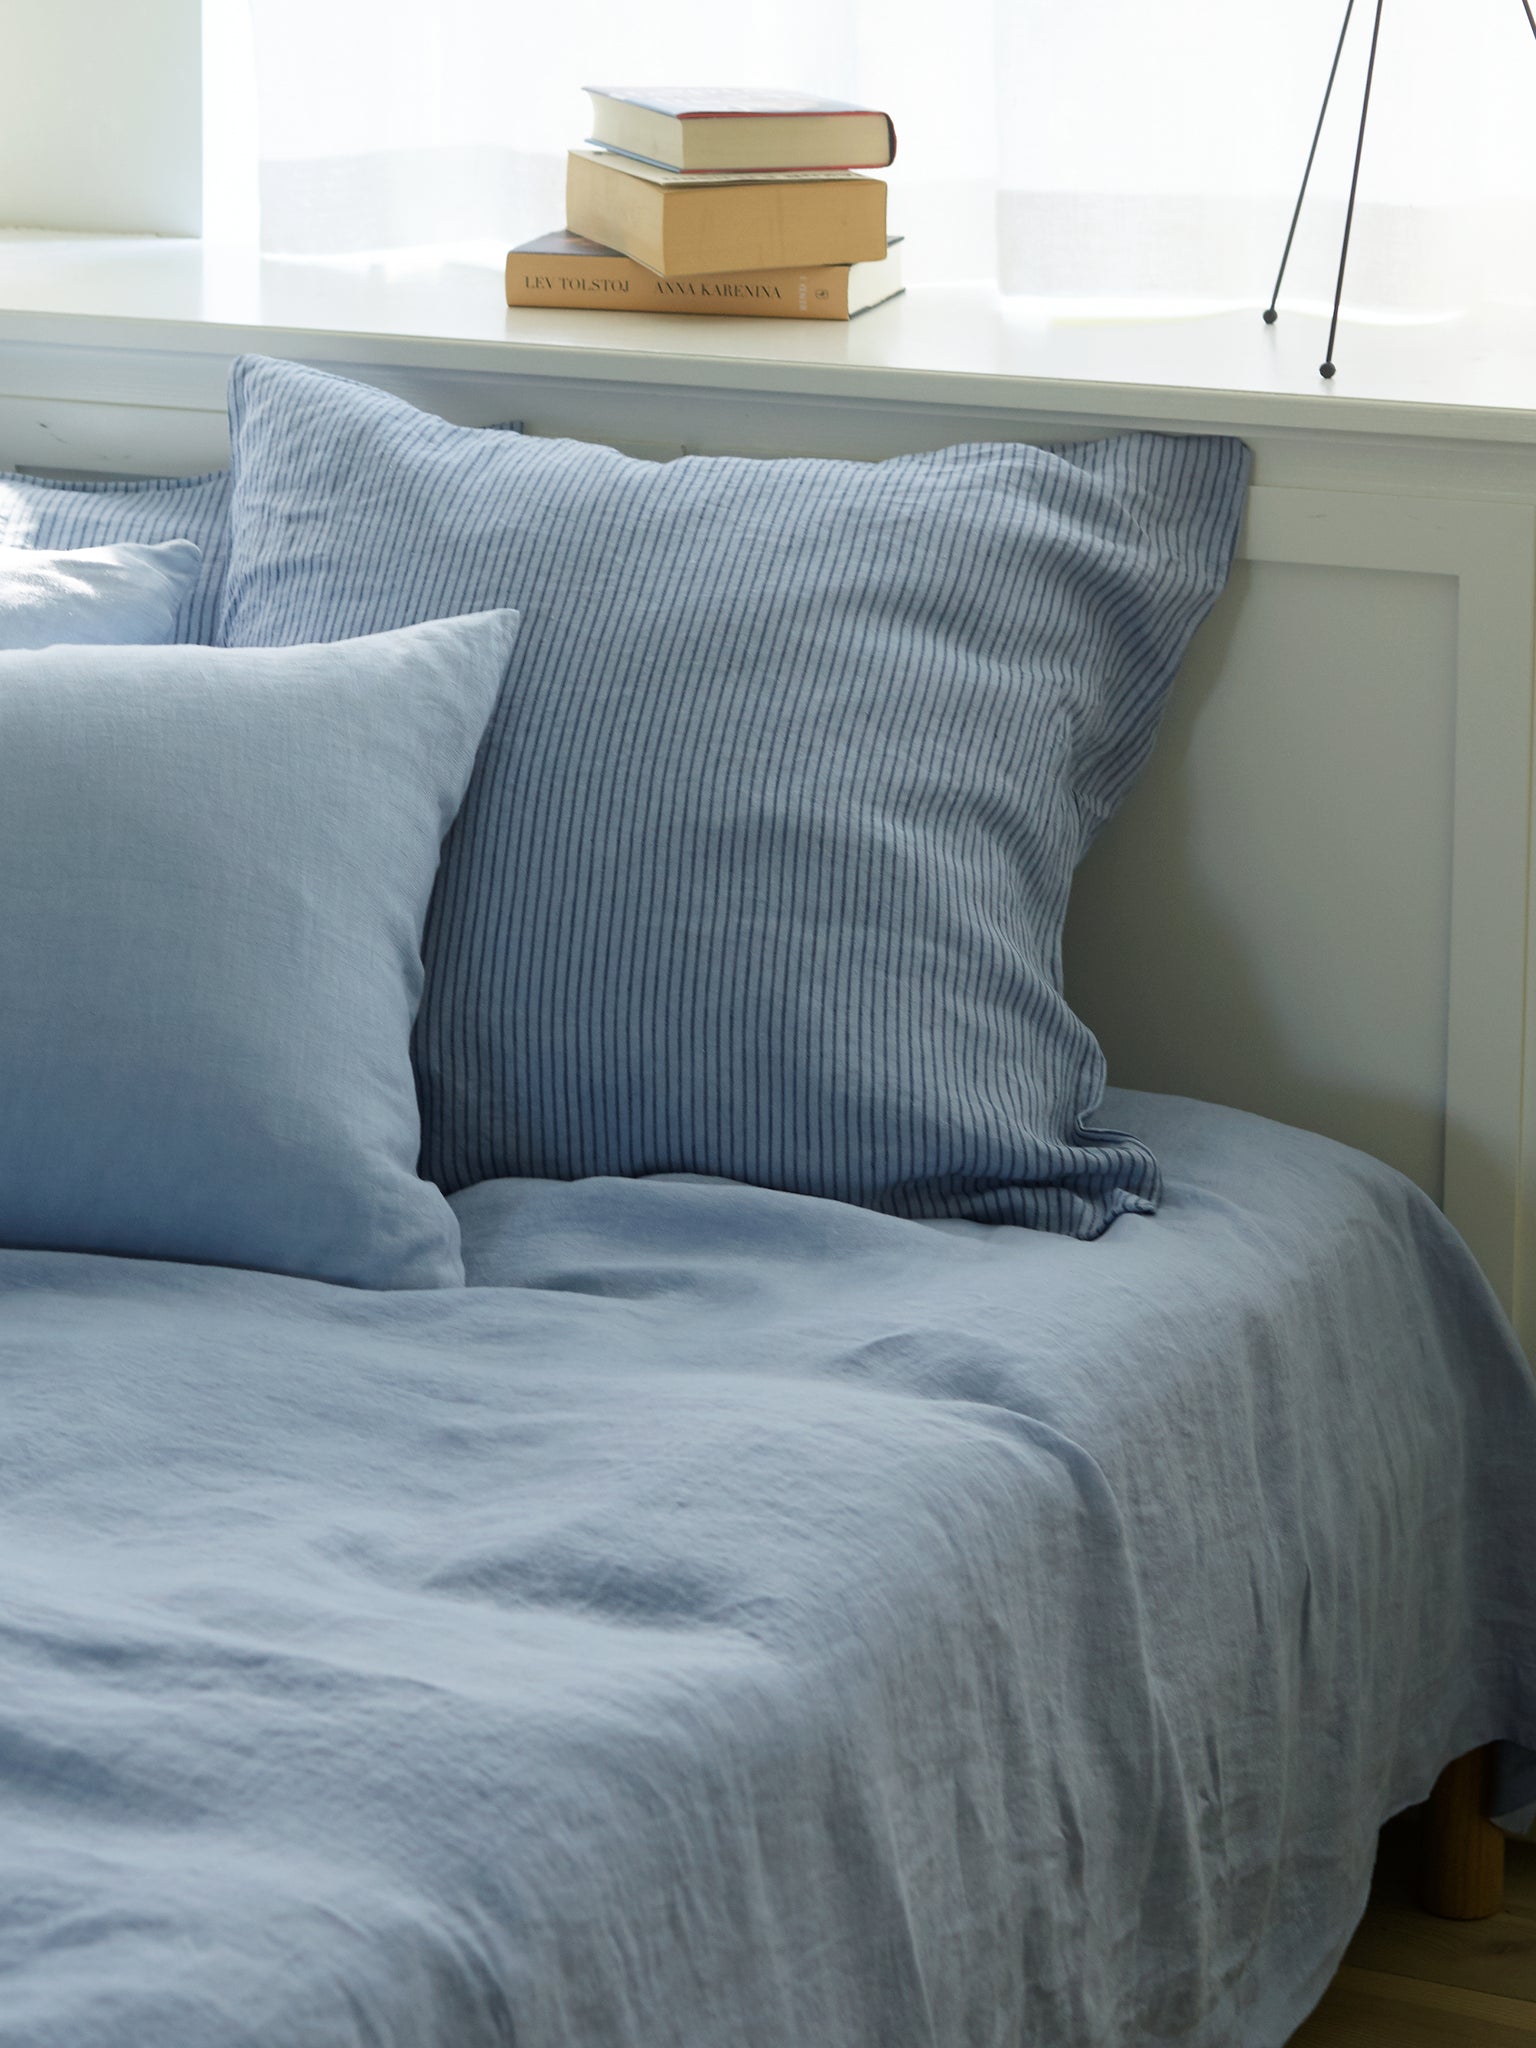 Stilleben Cushion Cover - 65 x 65 cm Cushion Cover Celestial Blue/Navy